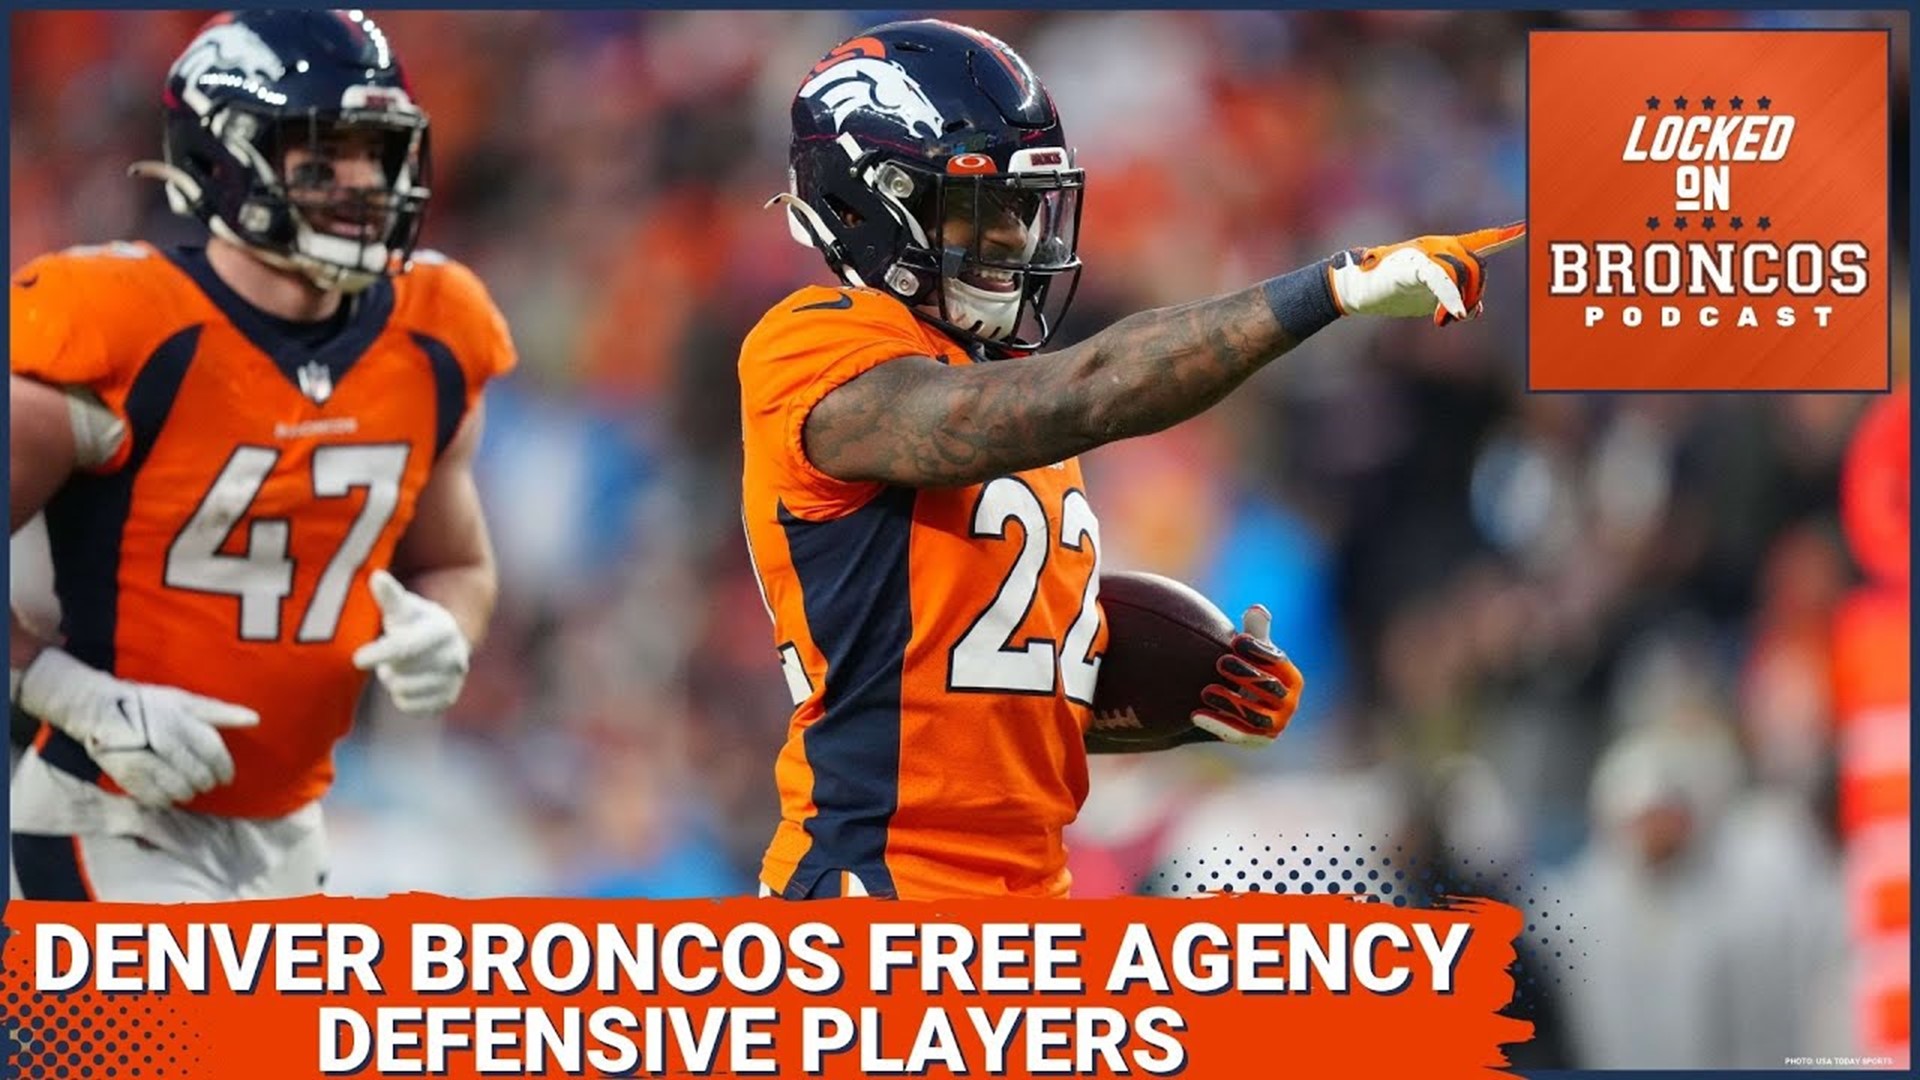 Denver Broncos Free Agency kicks off this week. Should Kareem Jackson, Dre'Mont Jones stay or go?